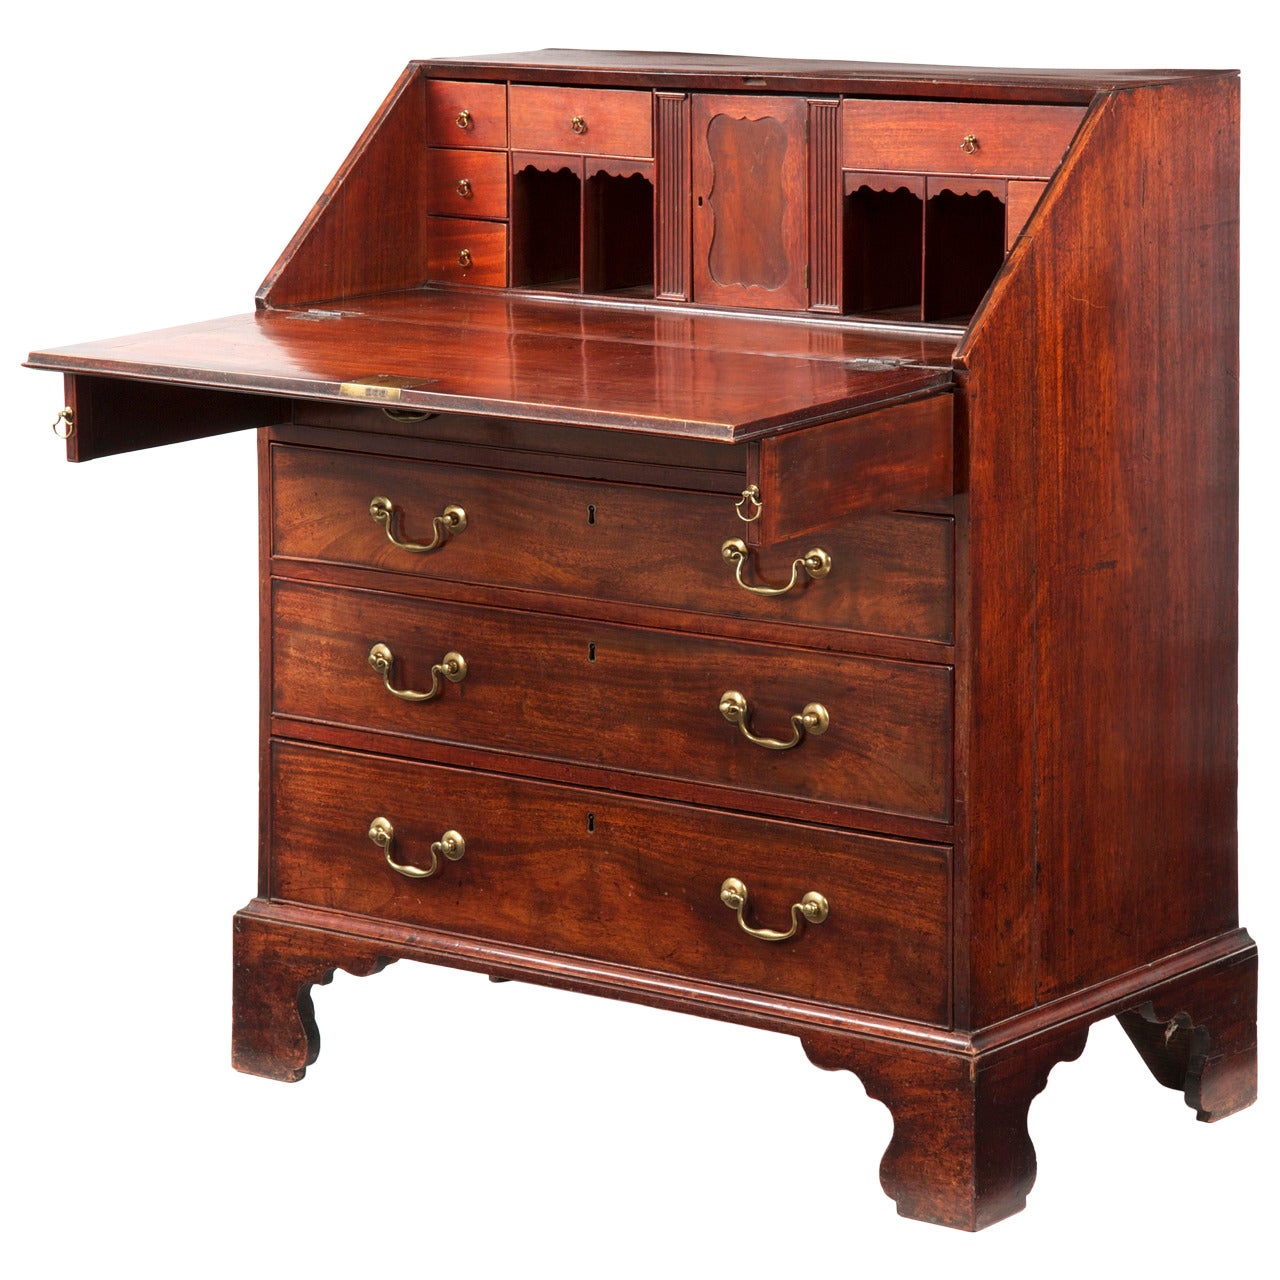 English George III Mahogany Antique Slant Front Desk c. 1780-1800